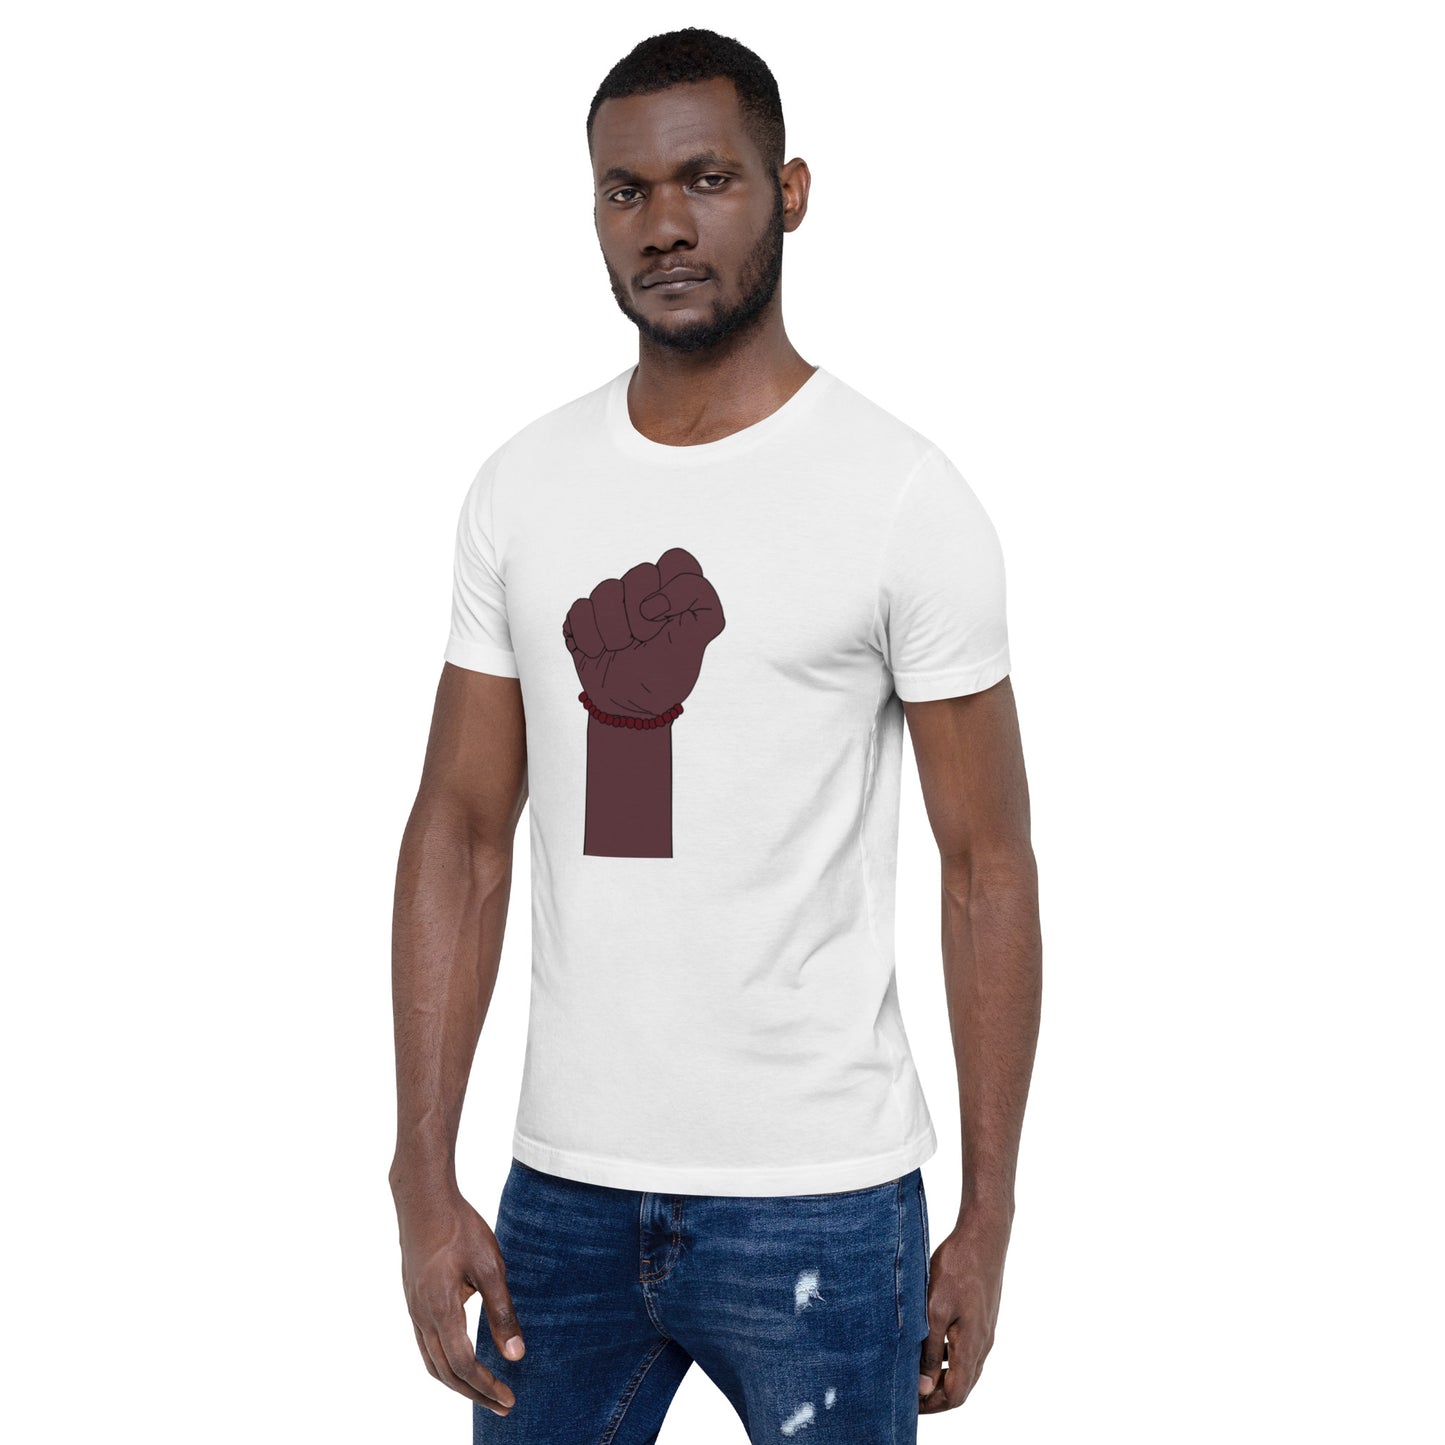 Oya Men's Ide T-shirt